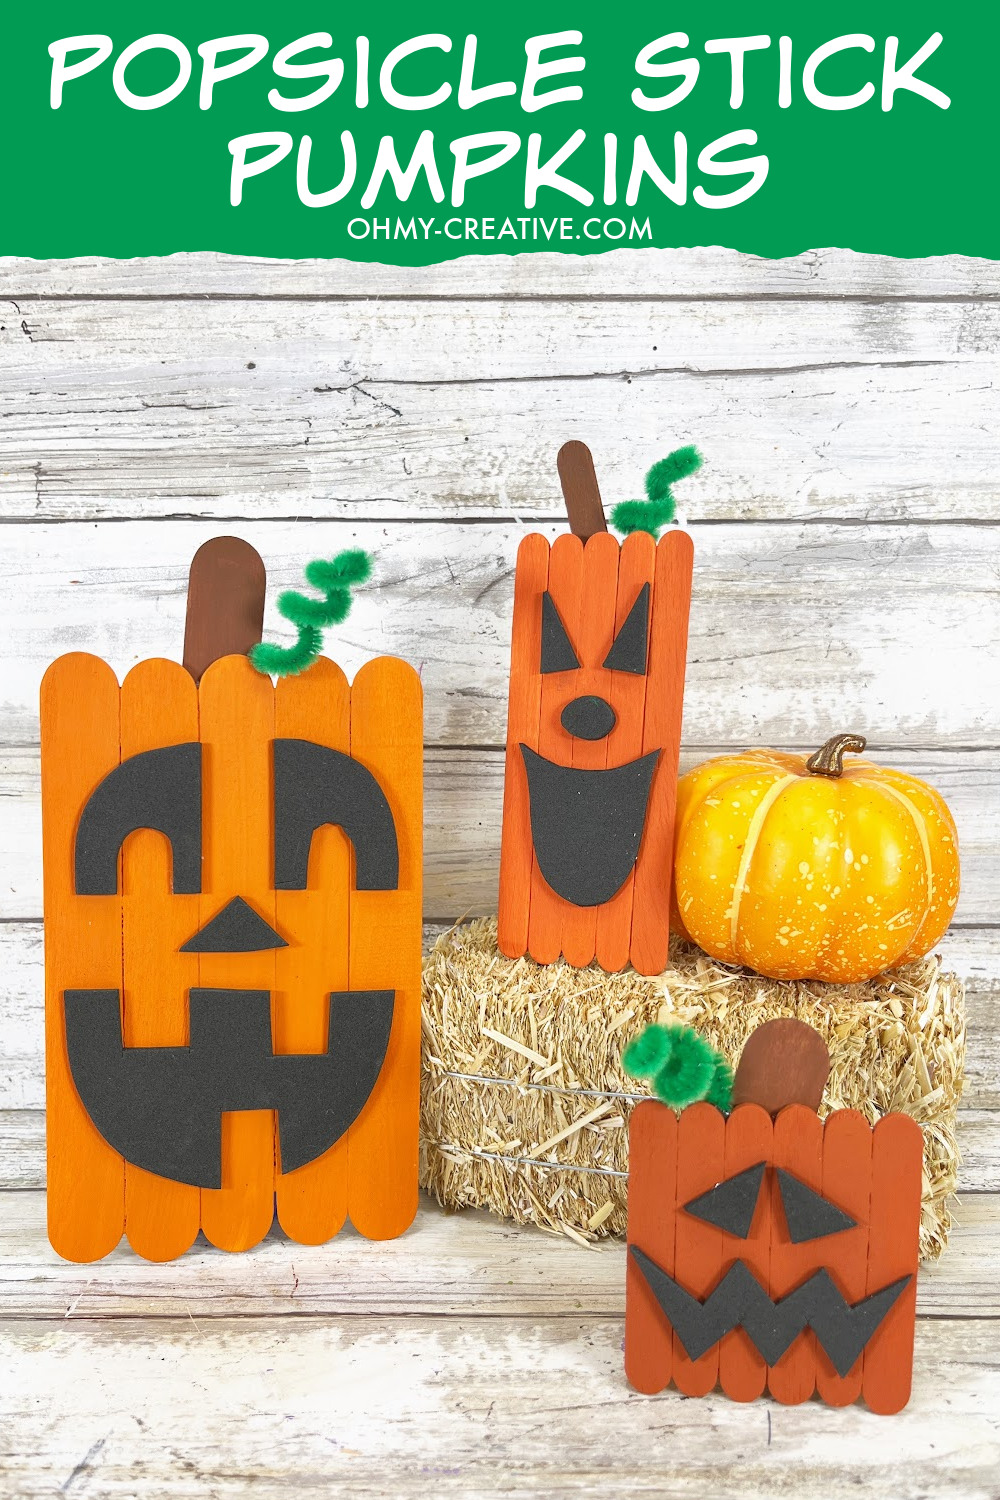 A popsicle stick pumpkin craft - 3 jack-o-lanterns made out of craft sticks.